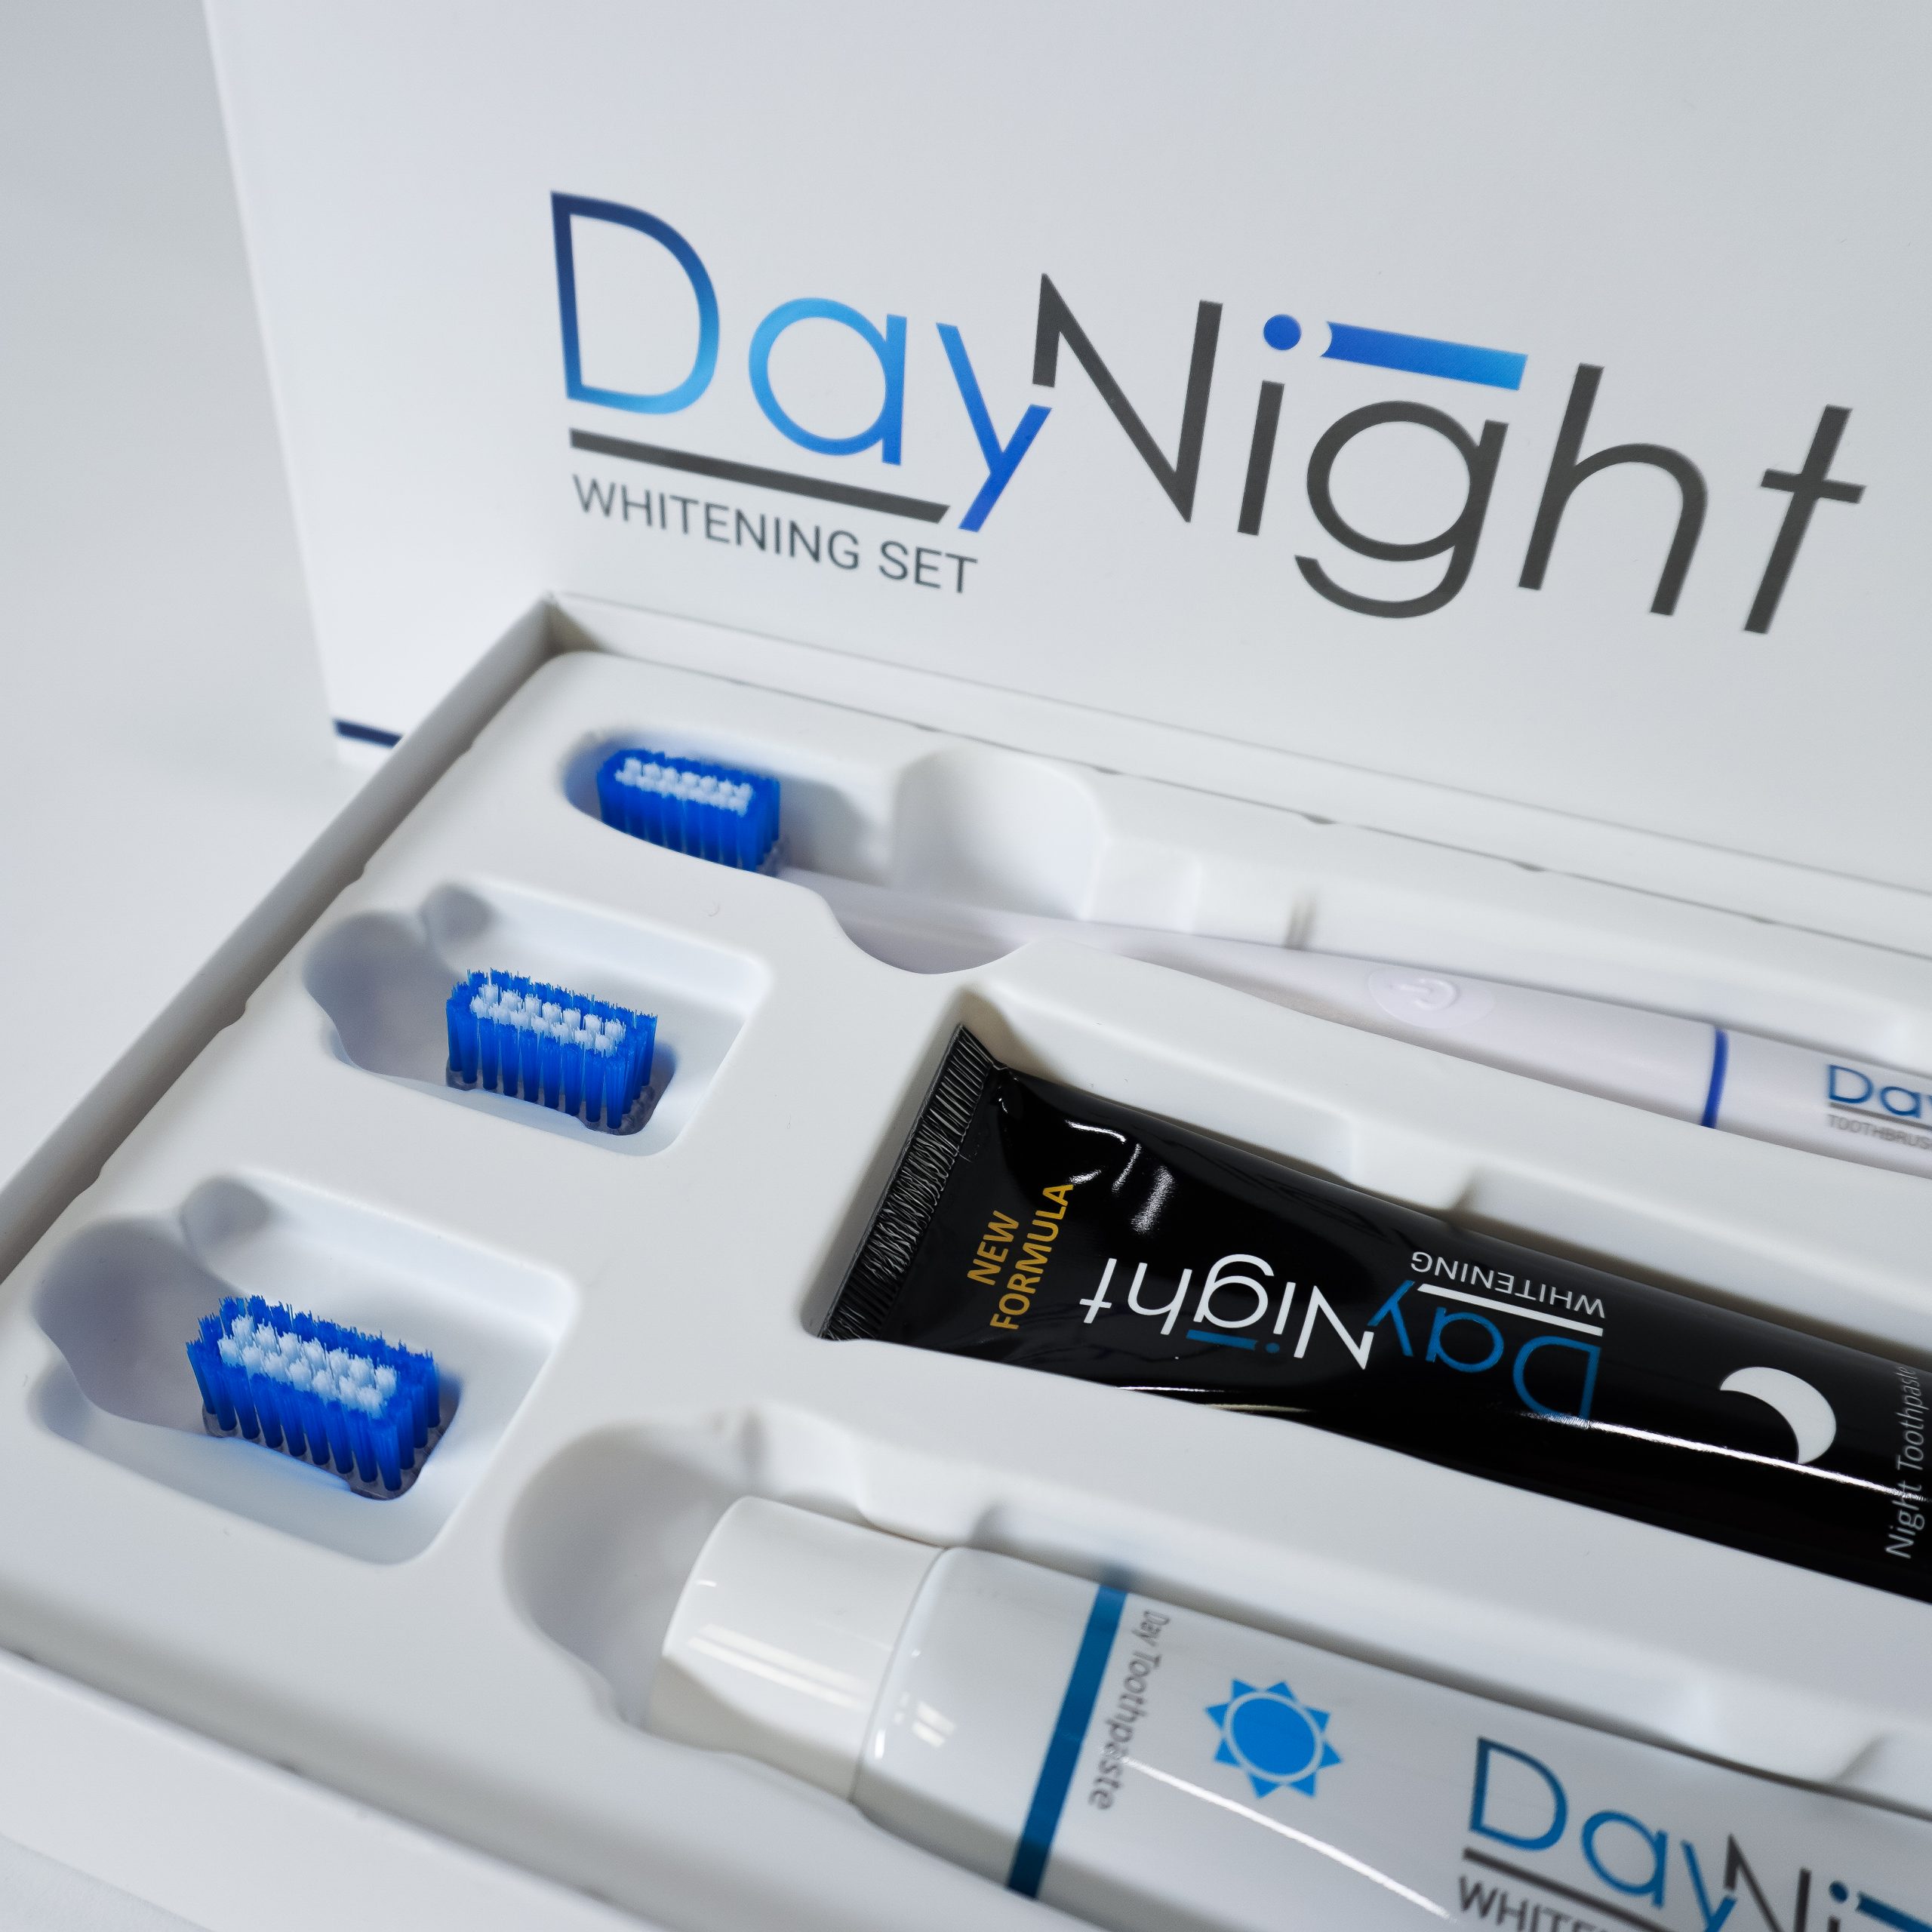 Morning & Night Toothpaste Kit